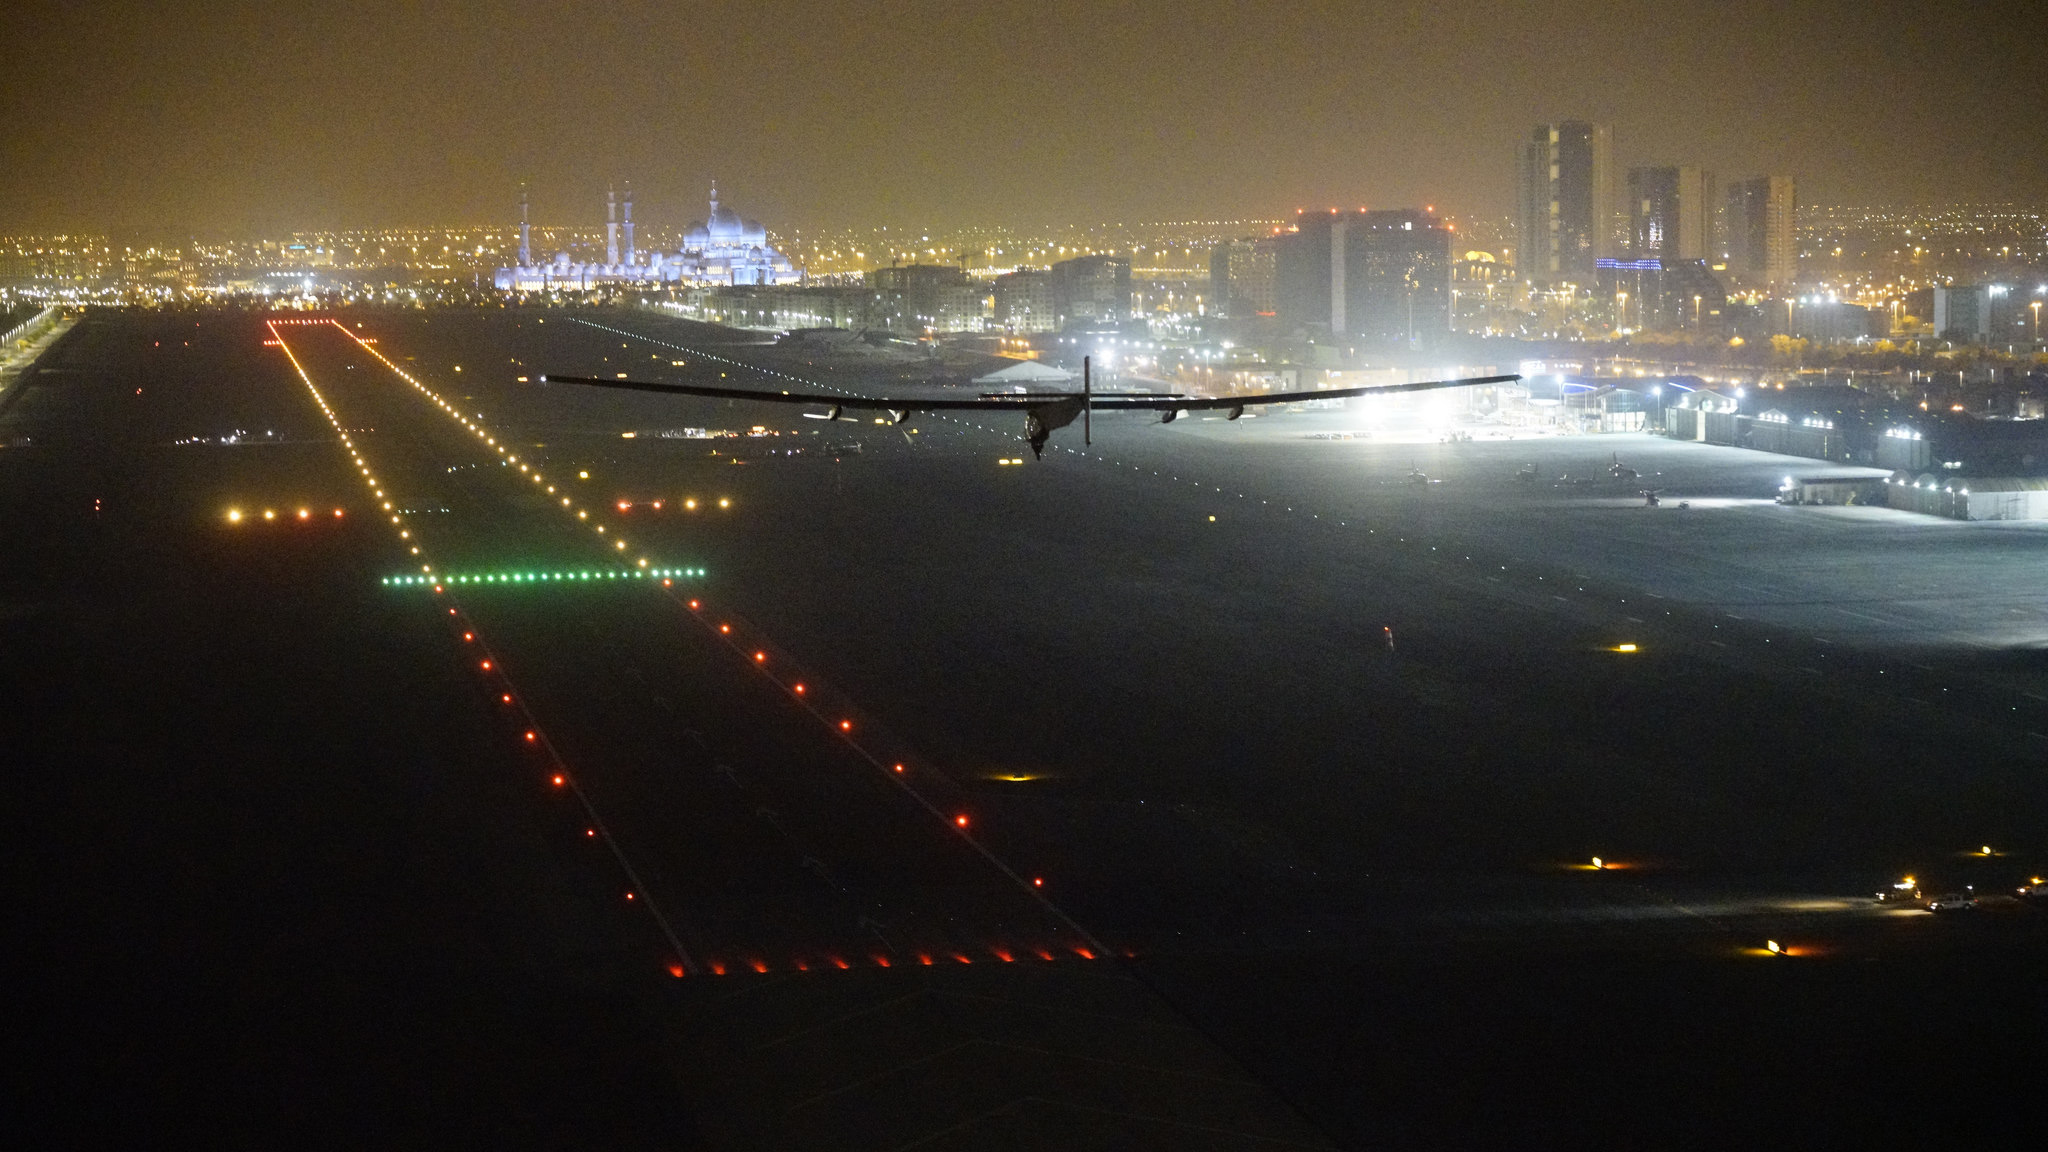 Solar Impulse 2 approaches to land in Abu Dhabi, concluding its round-the-world solar-powered flight. Photo courtesy of Solar Impulse.